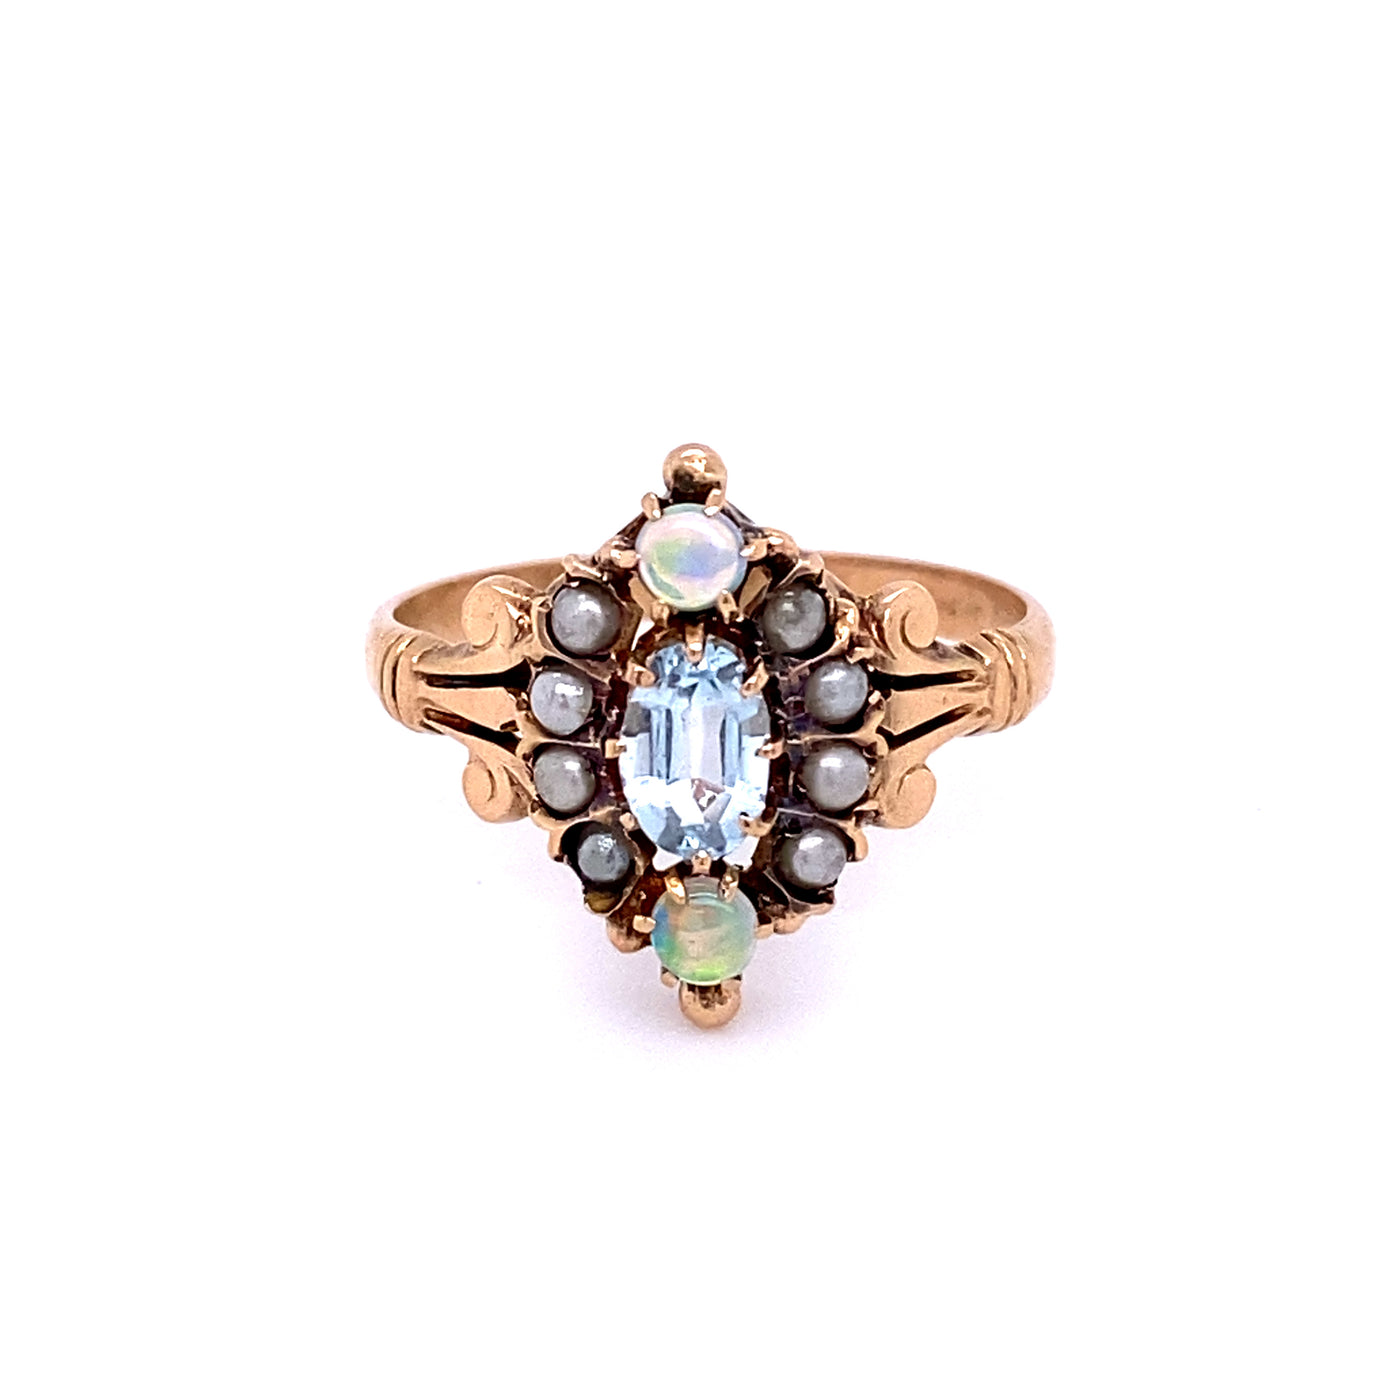 Victorian Aquamarine, Opal, and Pearl Ring